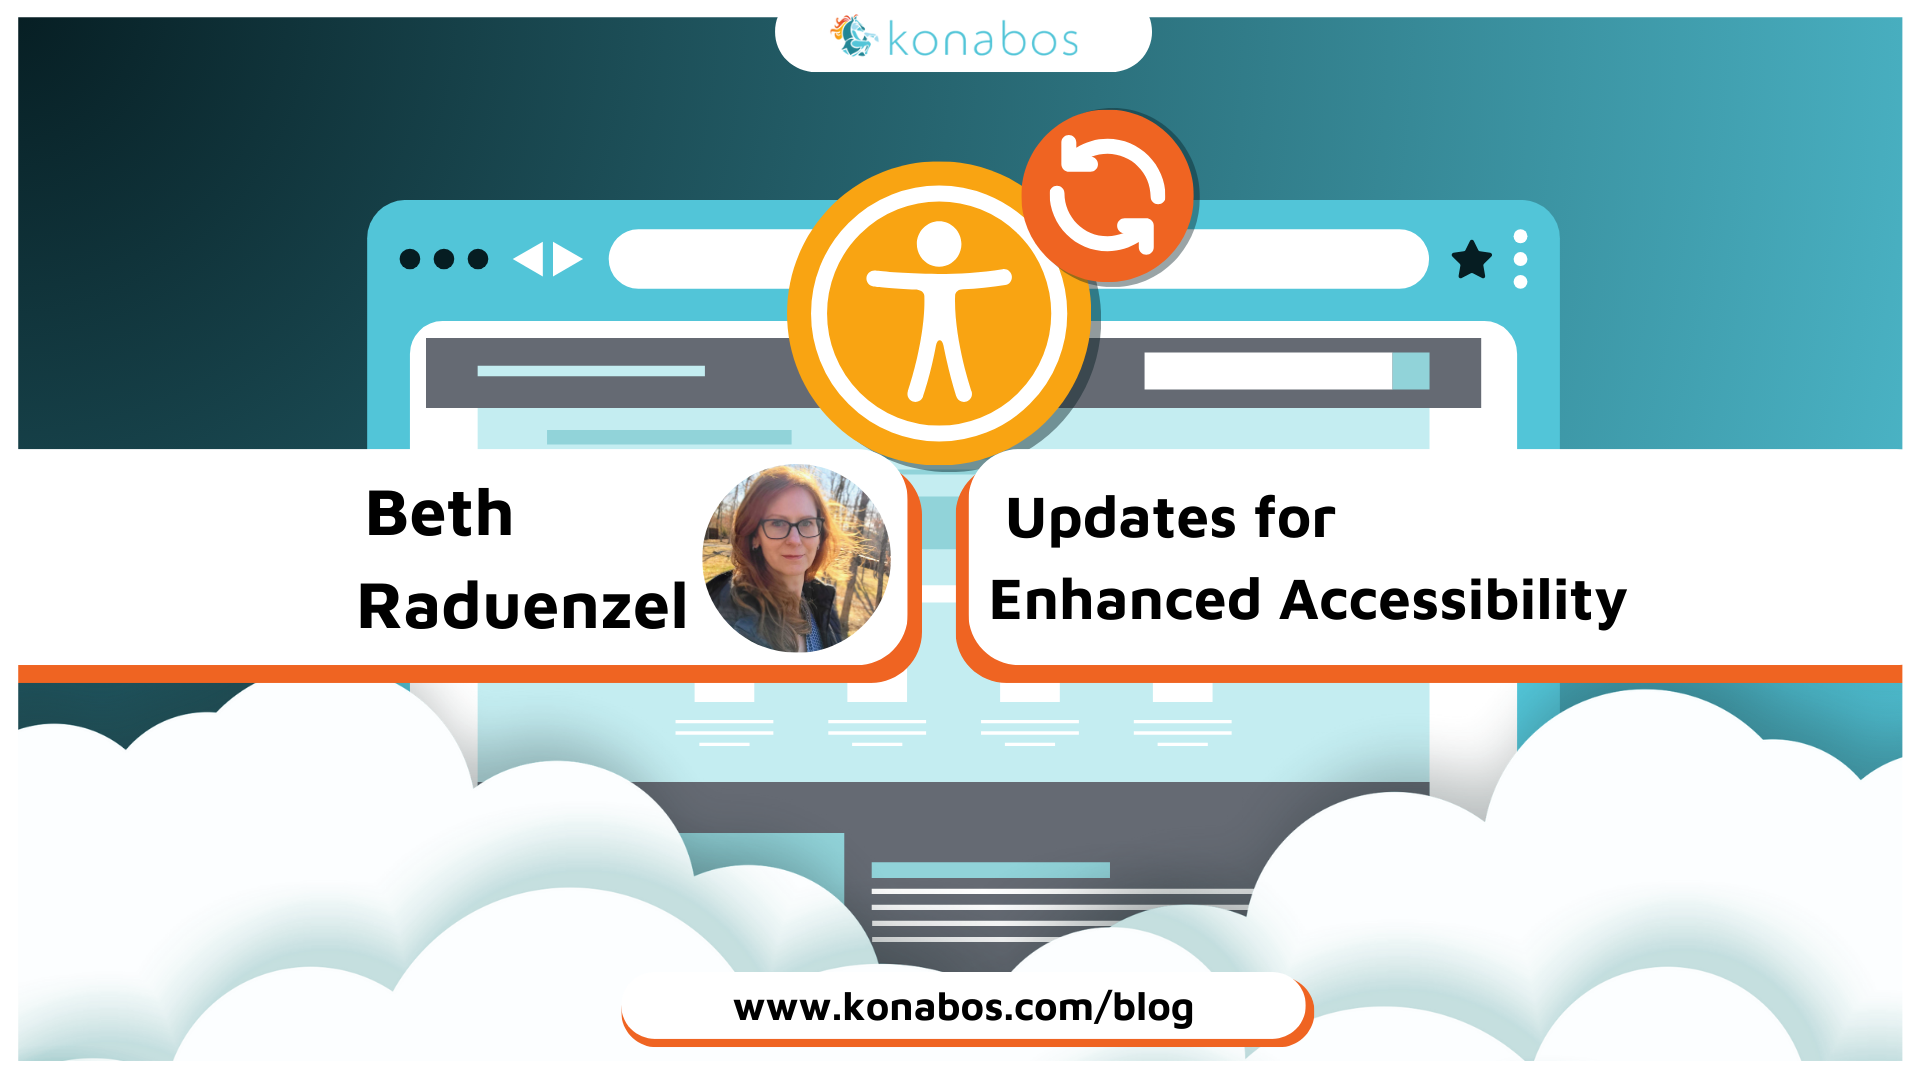 Beth Raduenzel - Updates for Enhanced Accessbility